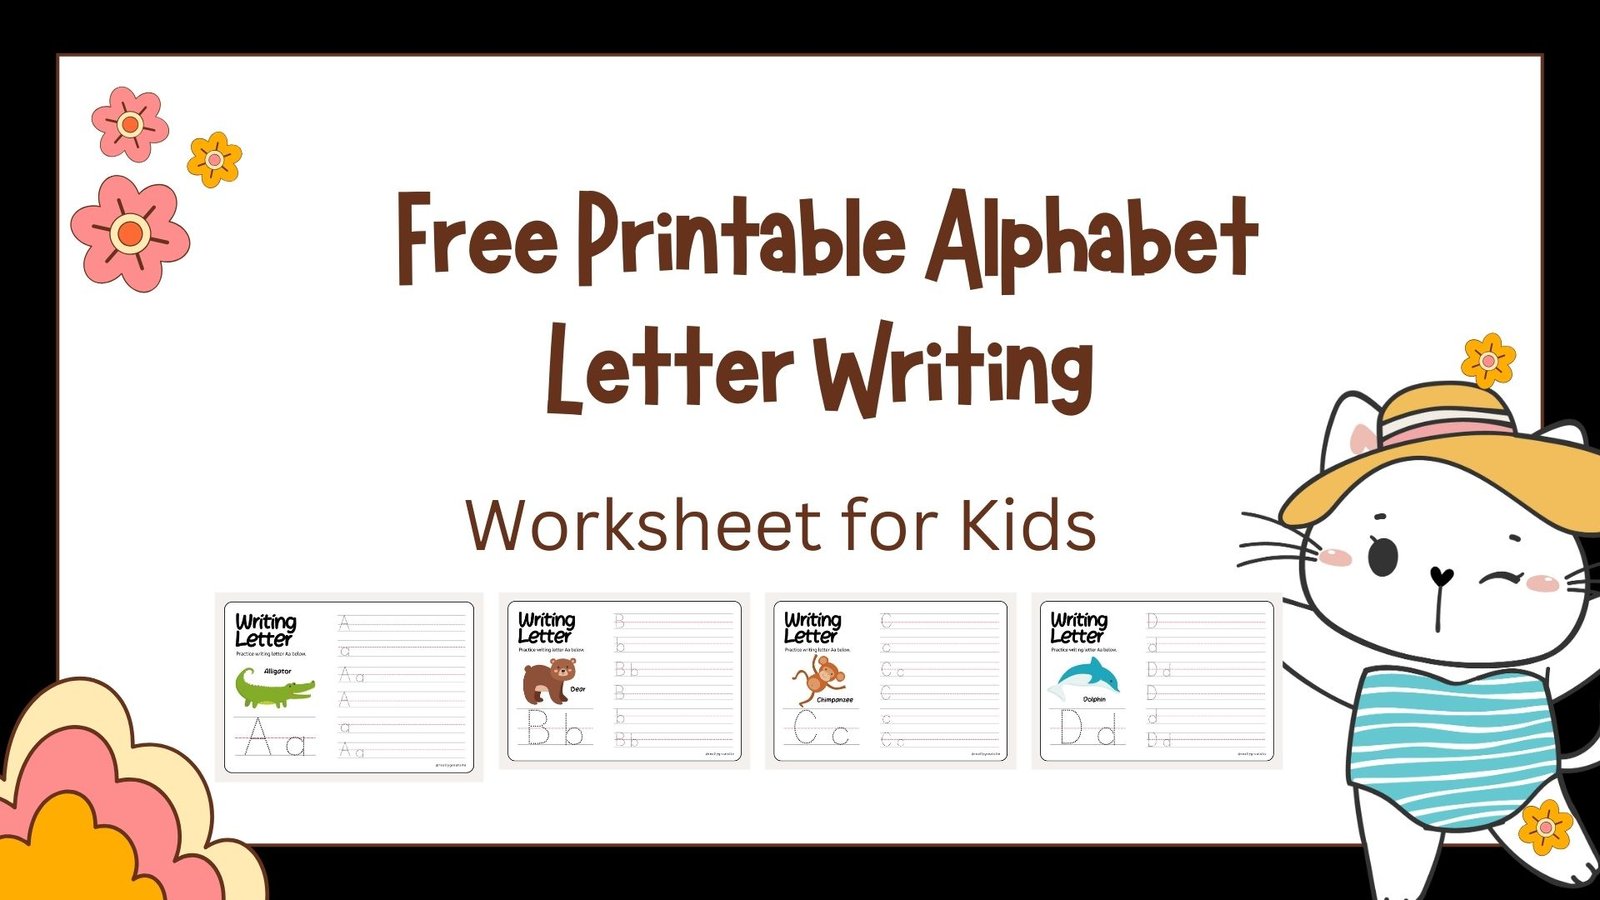 Free Printable Alphabet Letter Writing Worksheets